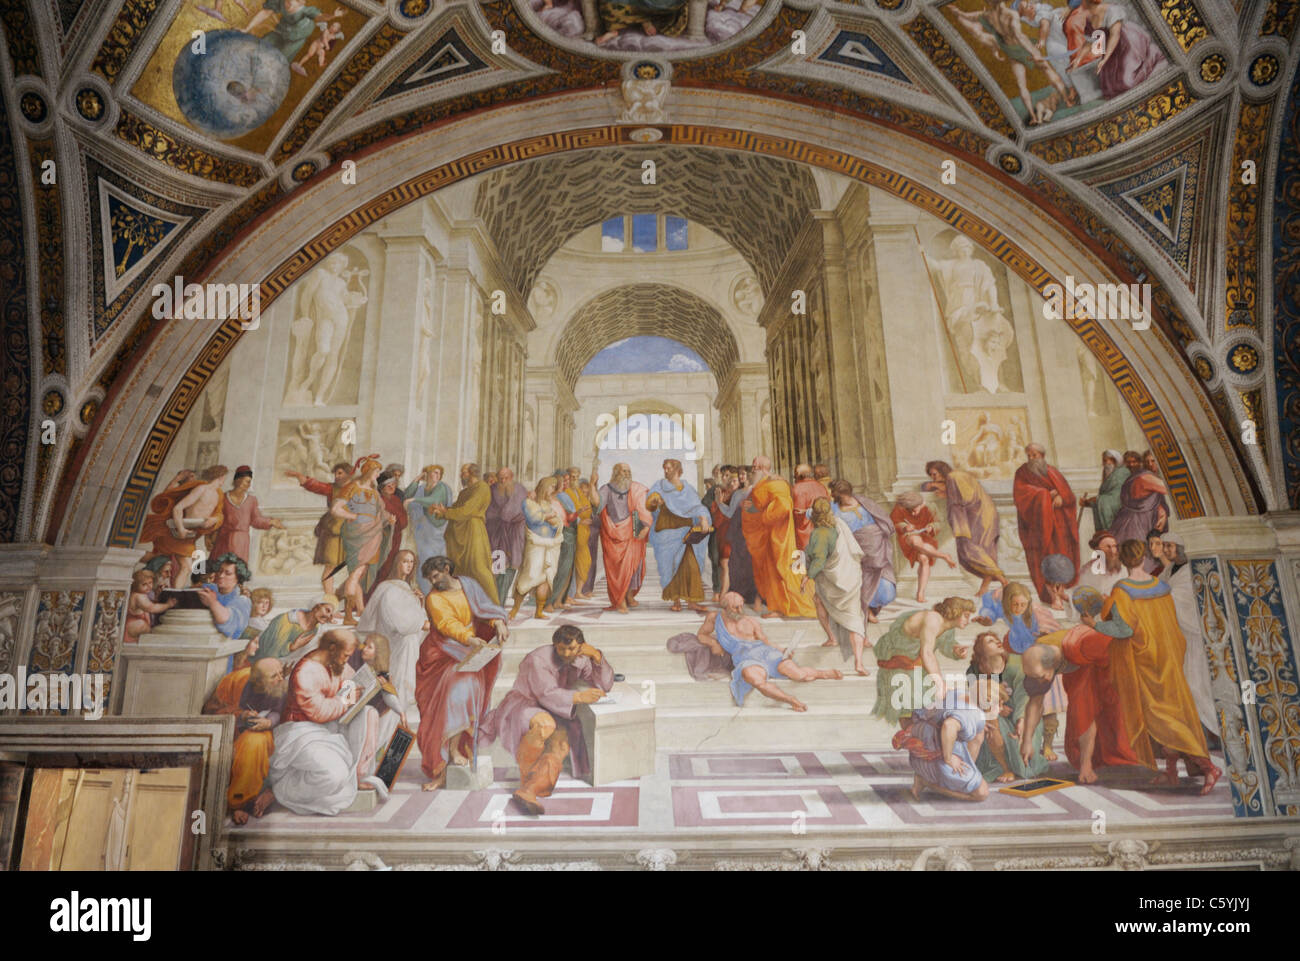 Raphael's School of Athens painting, Vatican Museums, Vatican City Stock Photo